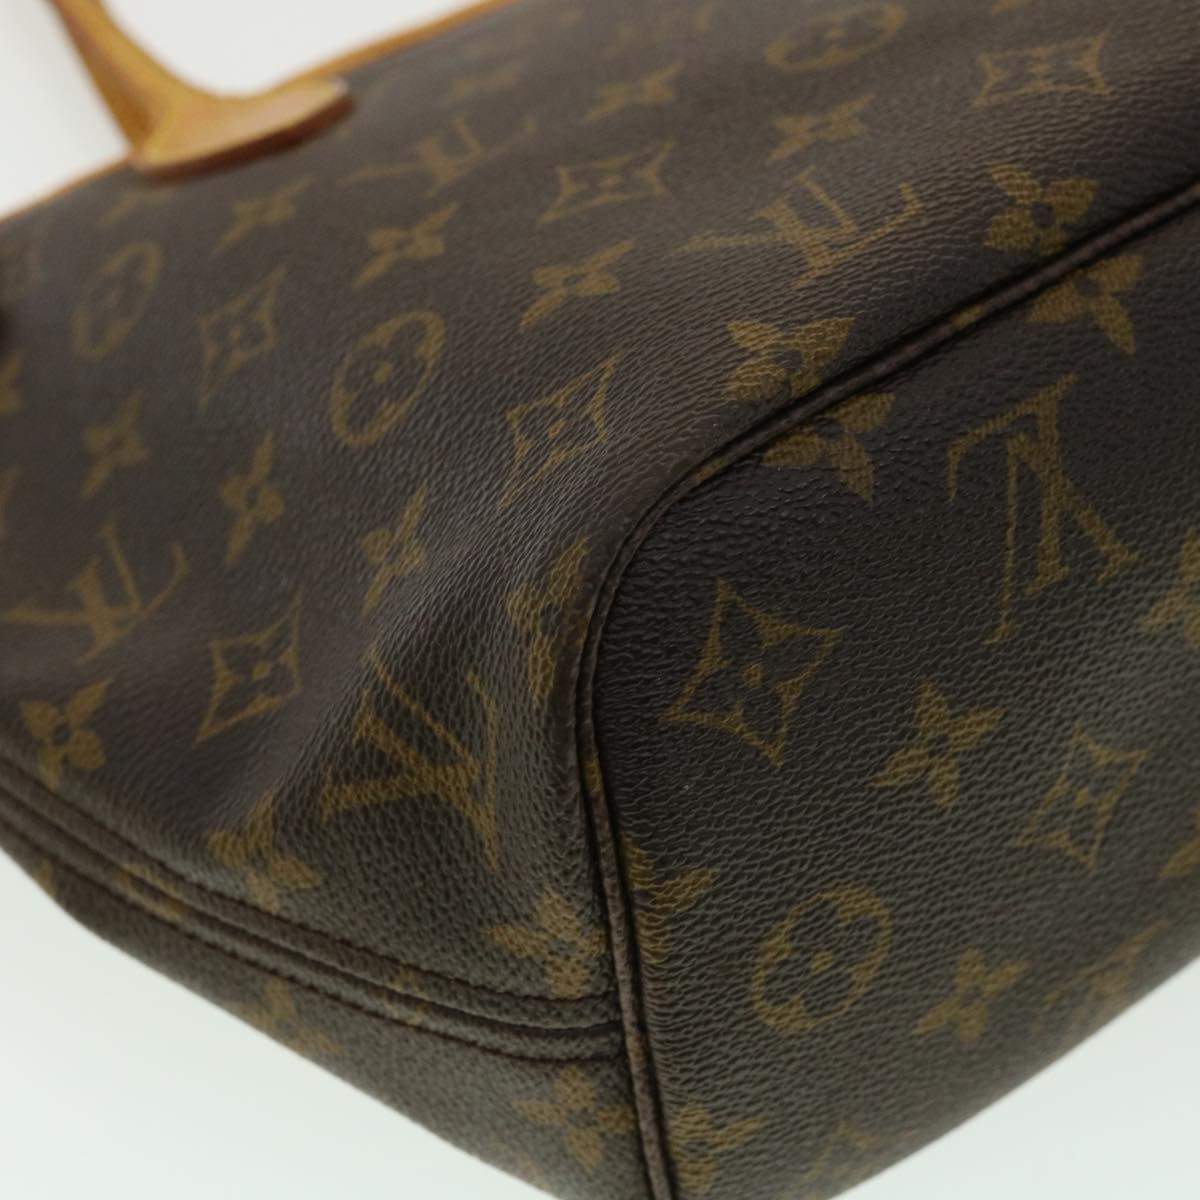 Authentic Louis Vuitton Monogram Neverfull PM Tote Bag Pink M41245